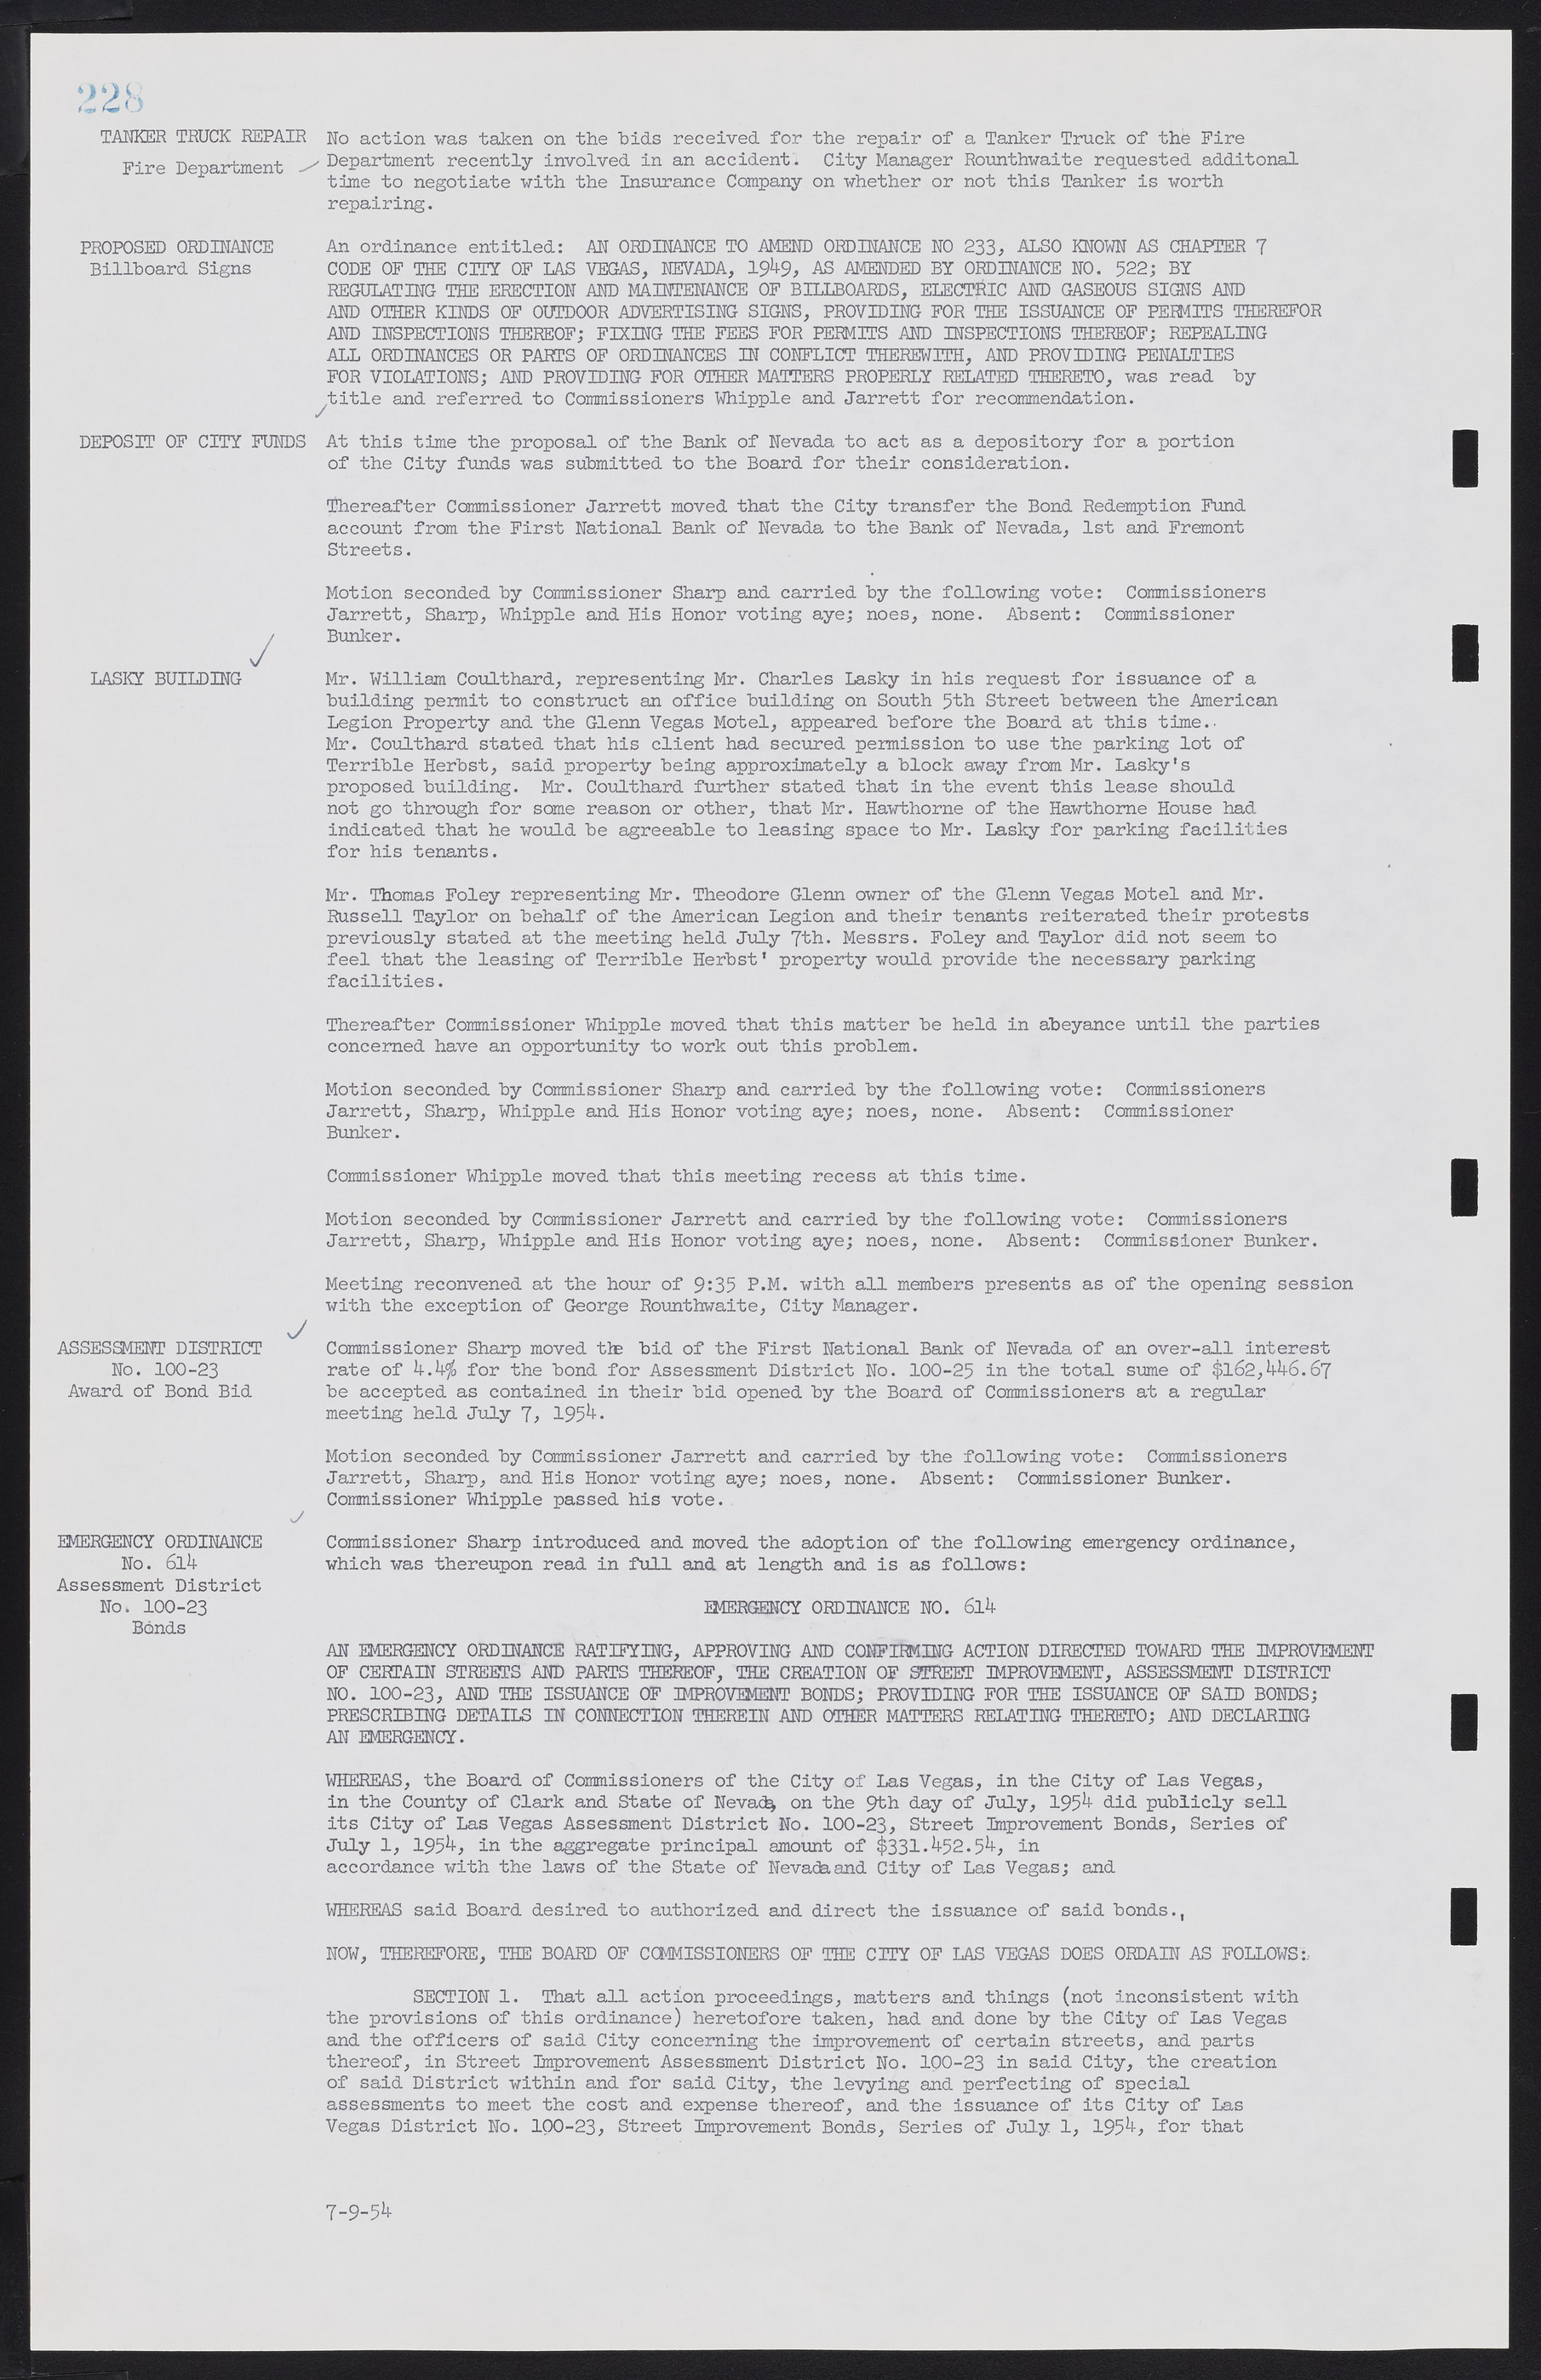 Las Vegas City Commission Minutes, February 17, 1954 to September 21, 1955, lvc000009-234